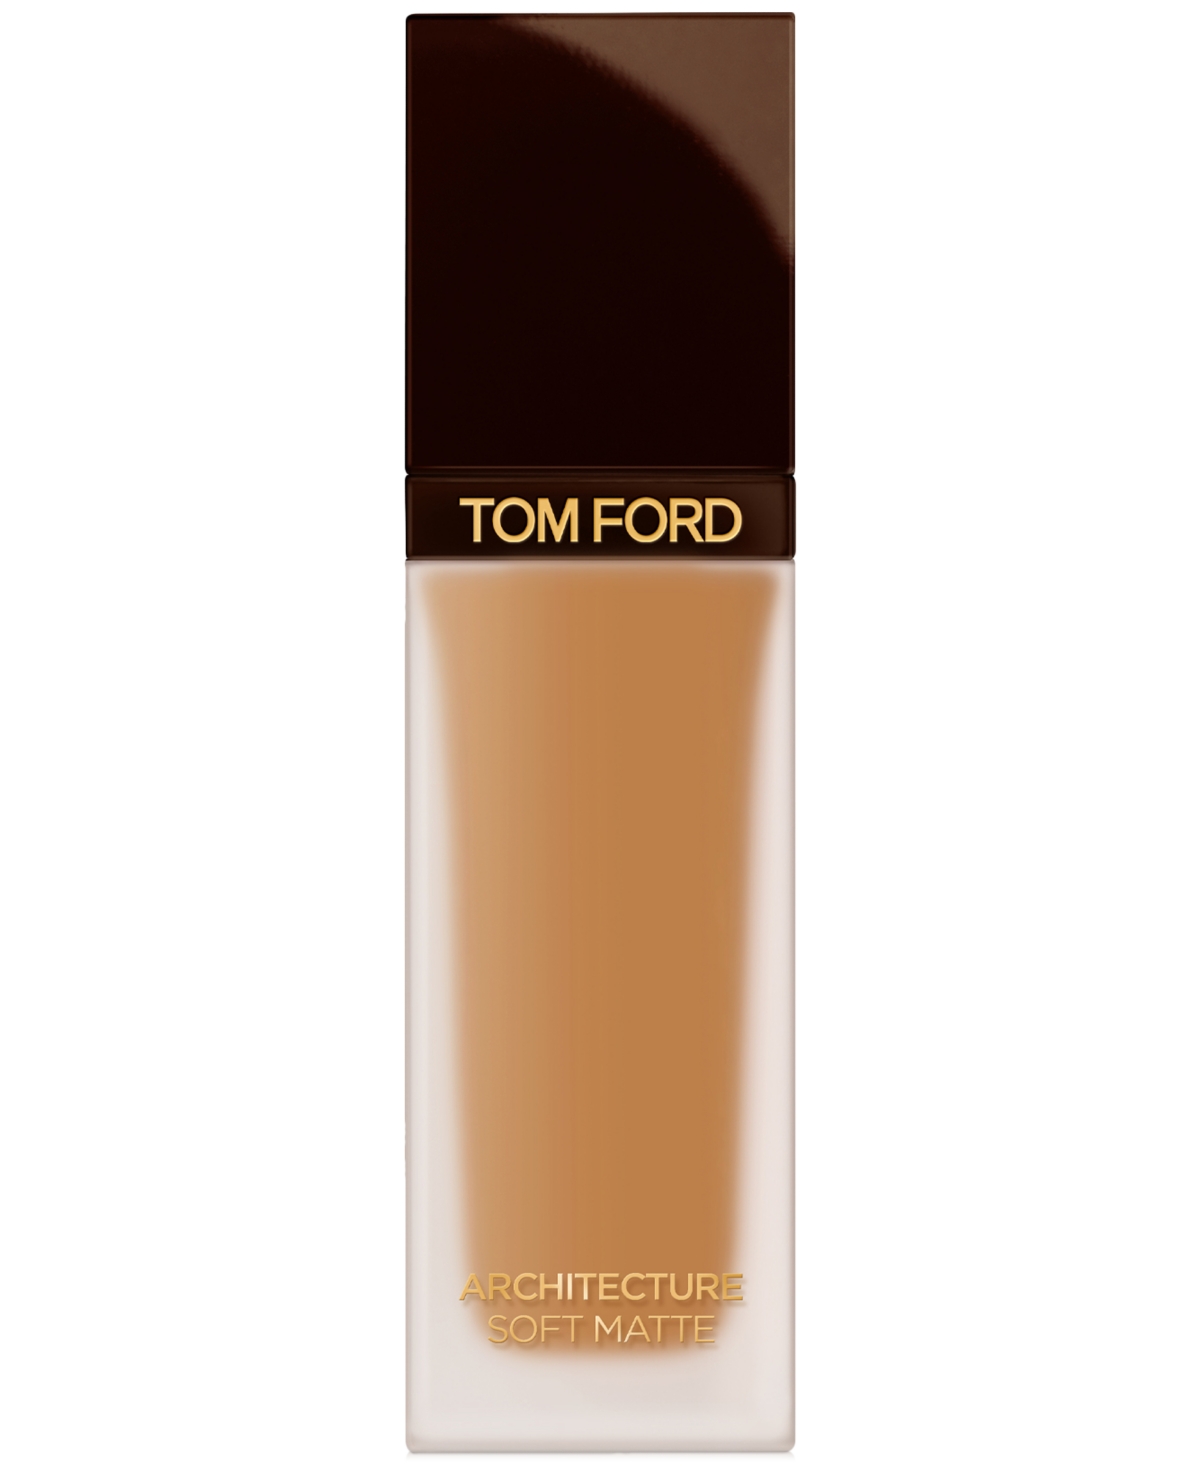 Shop Tom Ford Architecture Soft Matte Blurring Foundation In . Golden Almond - Deep